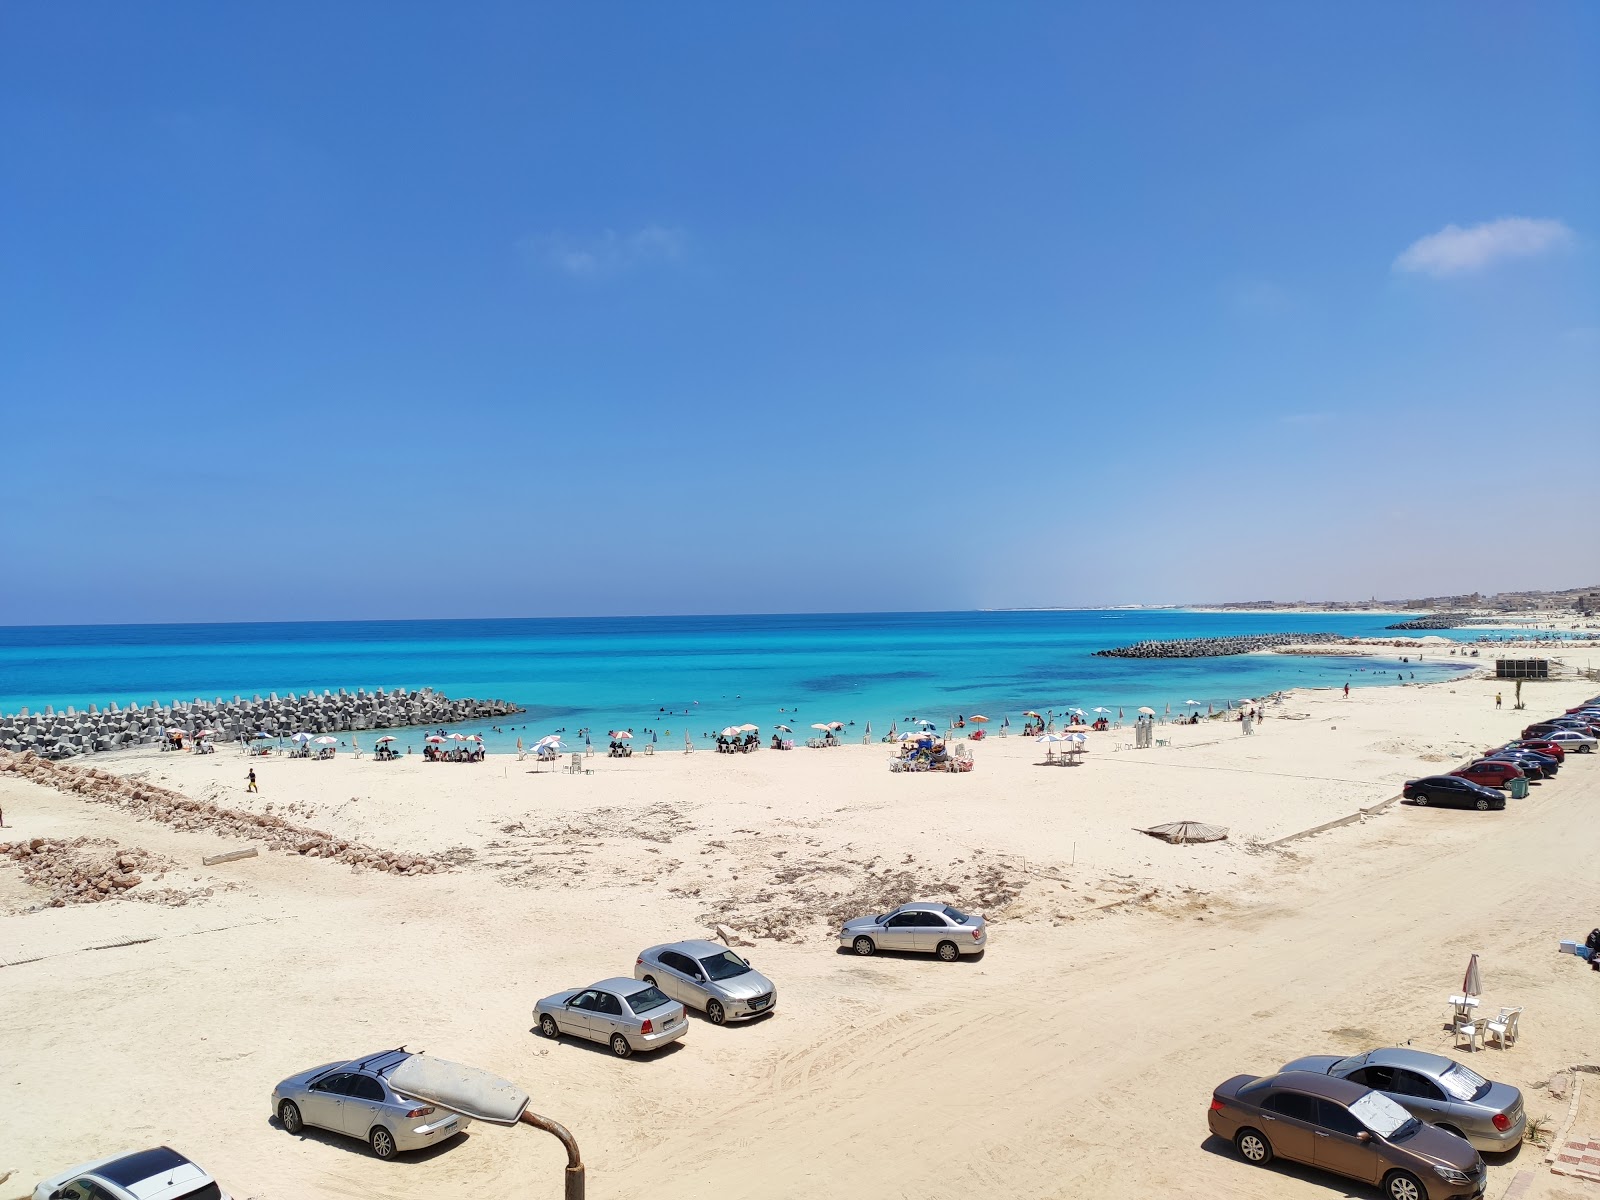 Foto di Blue beach Matrouh con una superficie del sabbia bianca